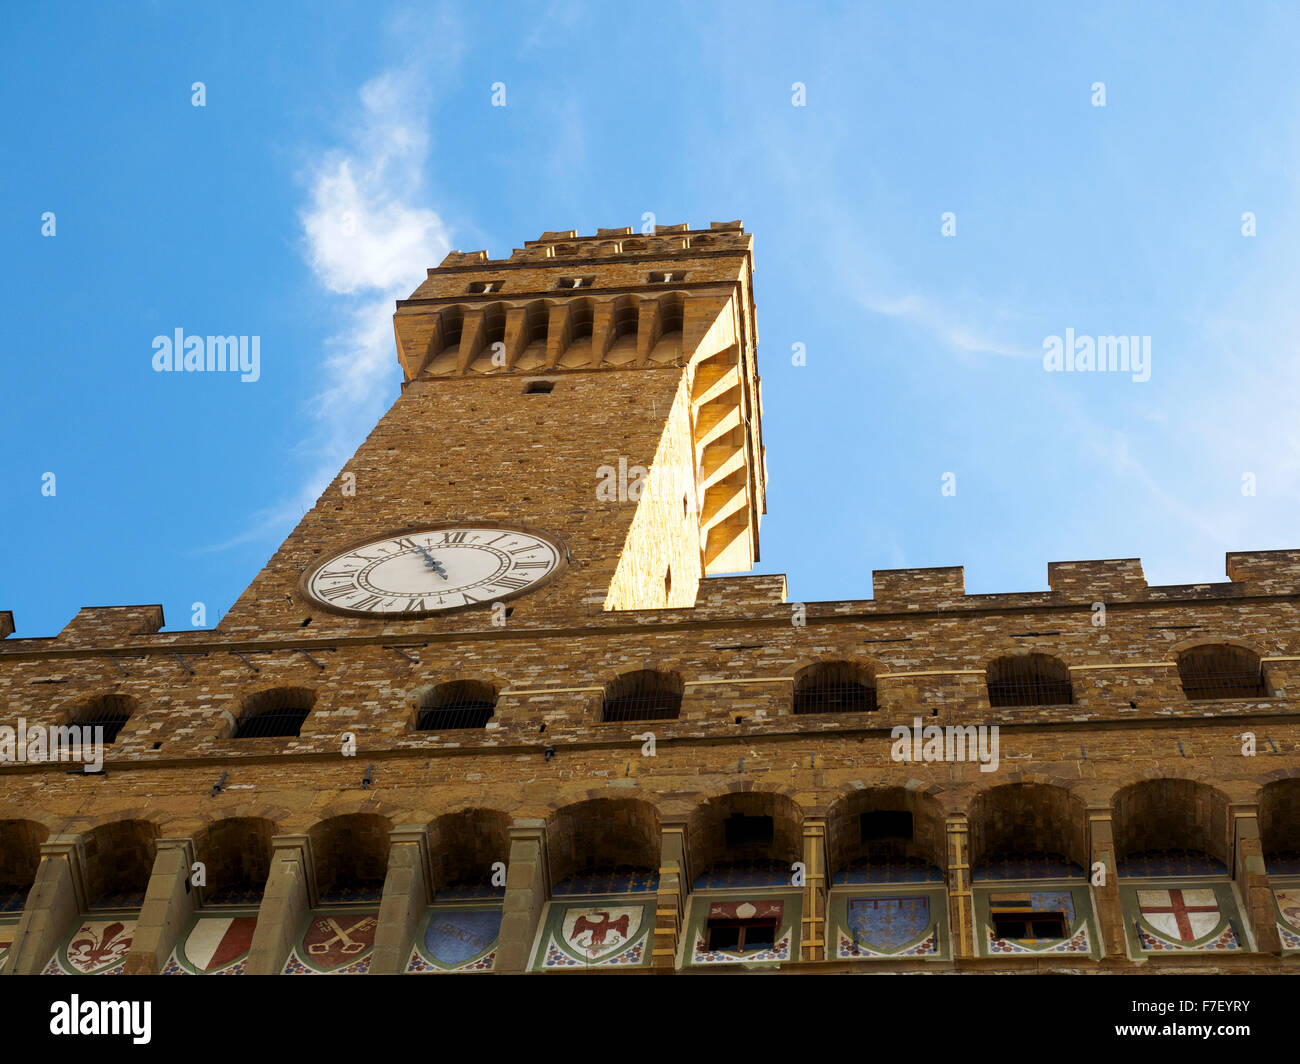 Clock tower of Palazzo Vecchio - Florence, Italy Stock Photo